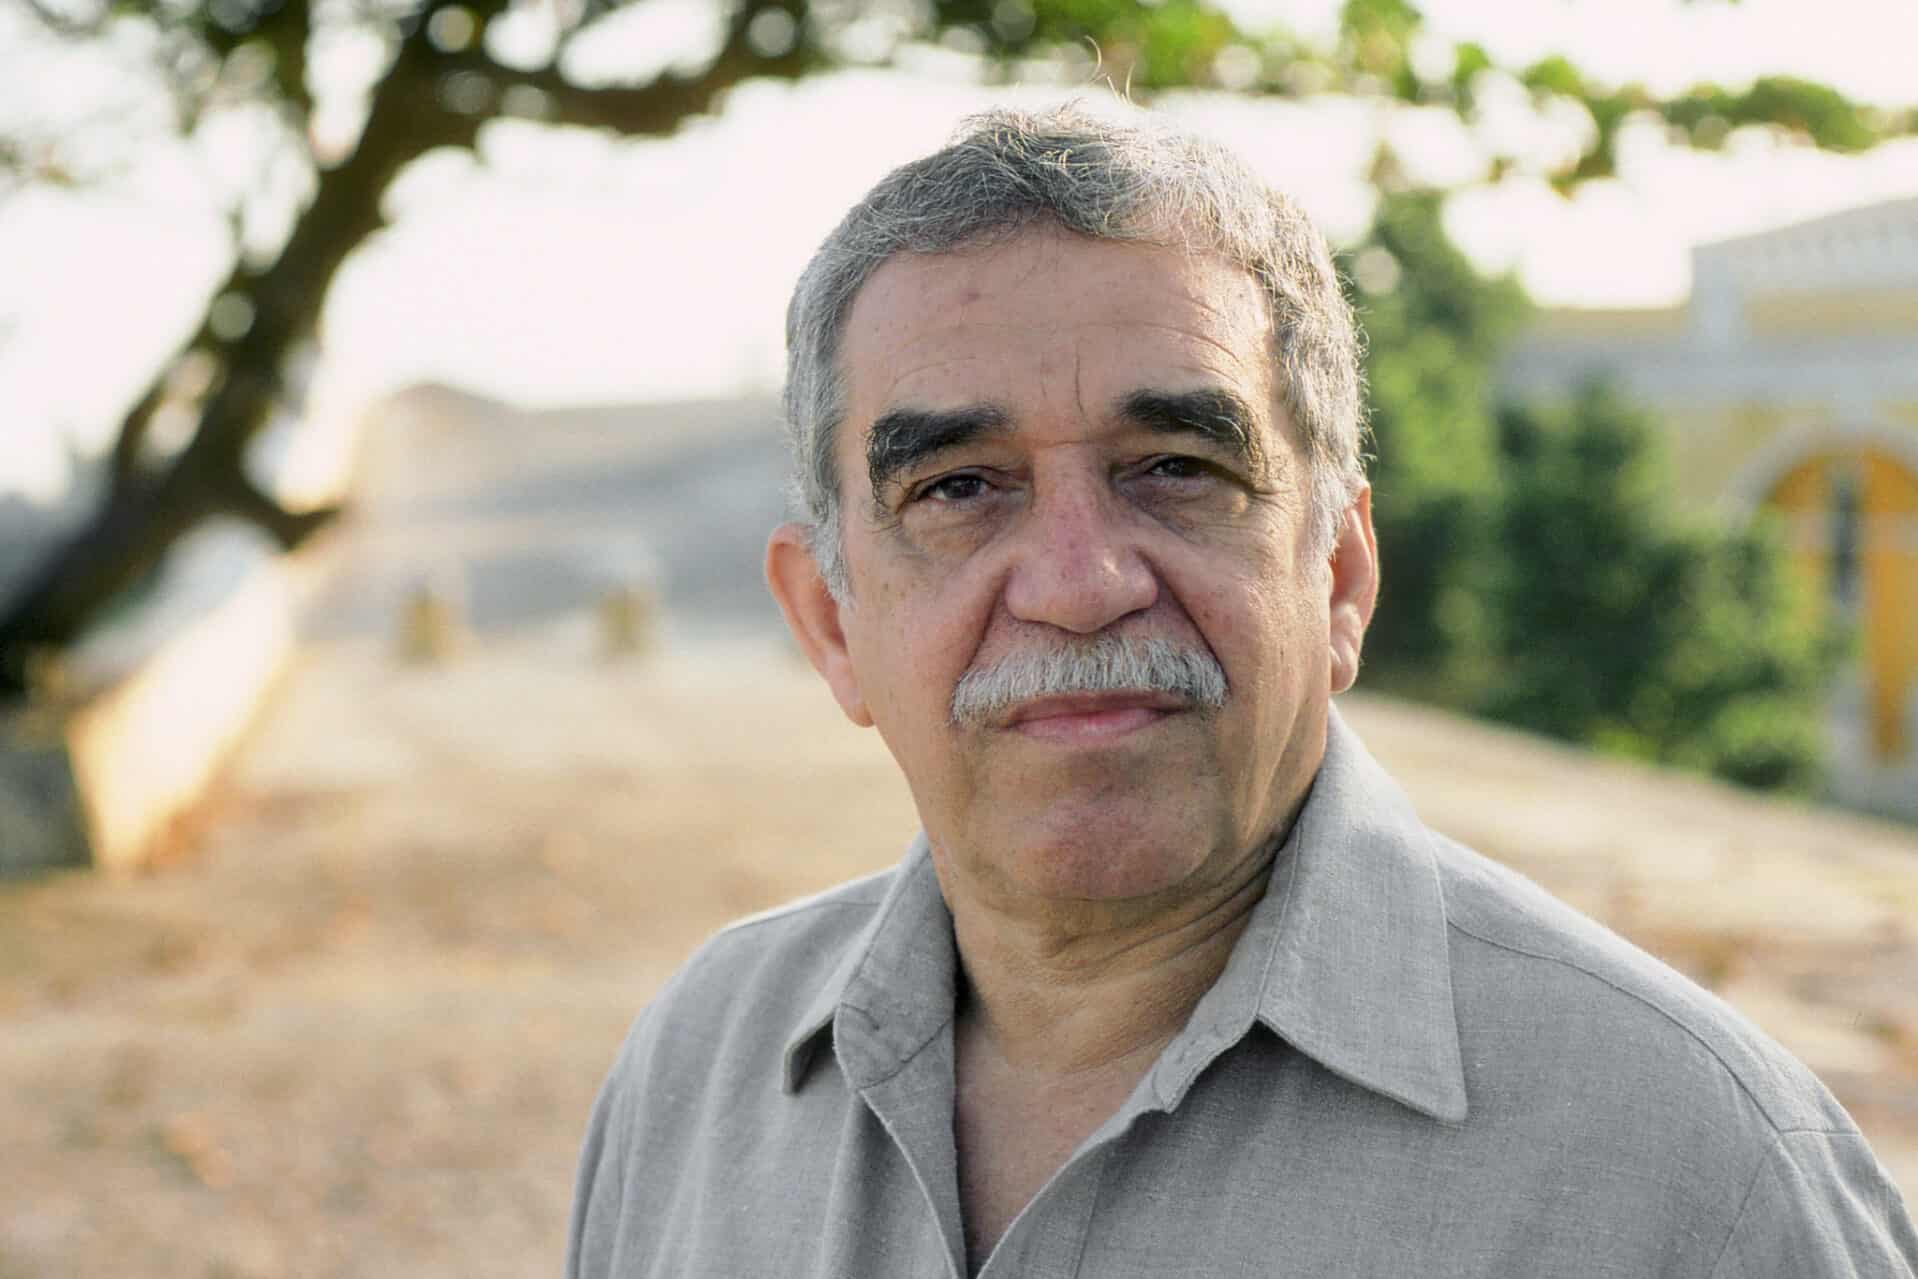 How rich is Gabriel Garcia Marquez?